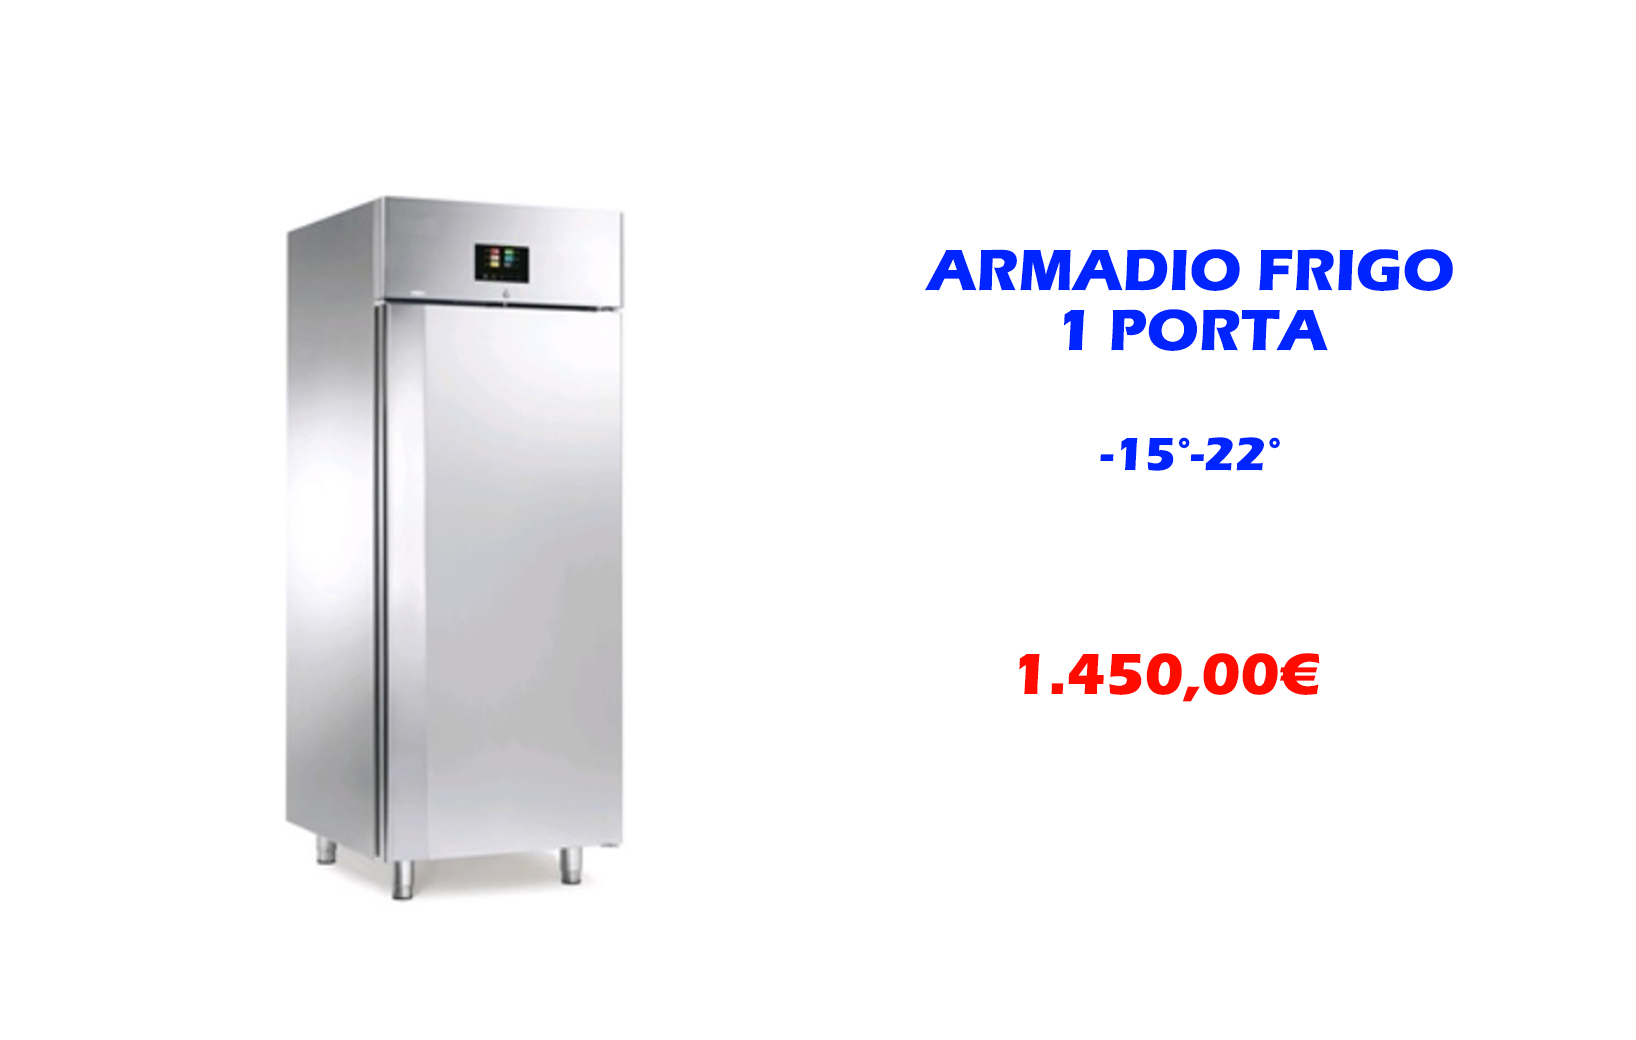 Armadio frigo